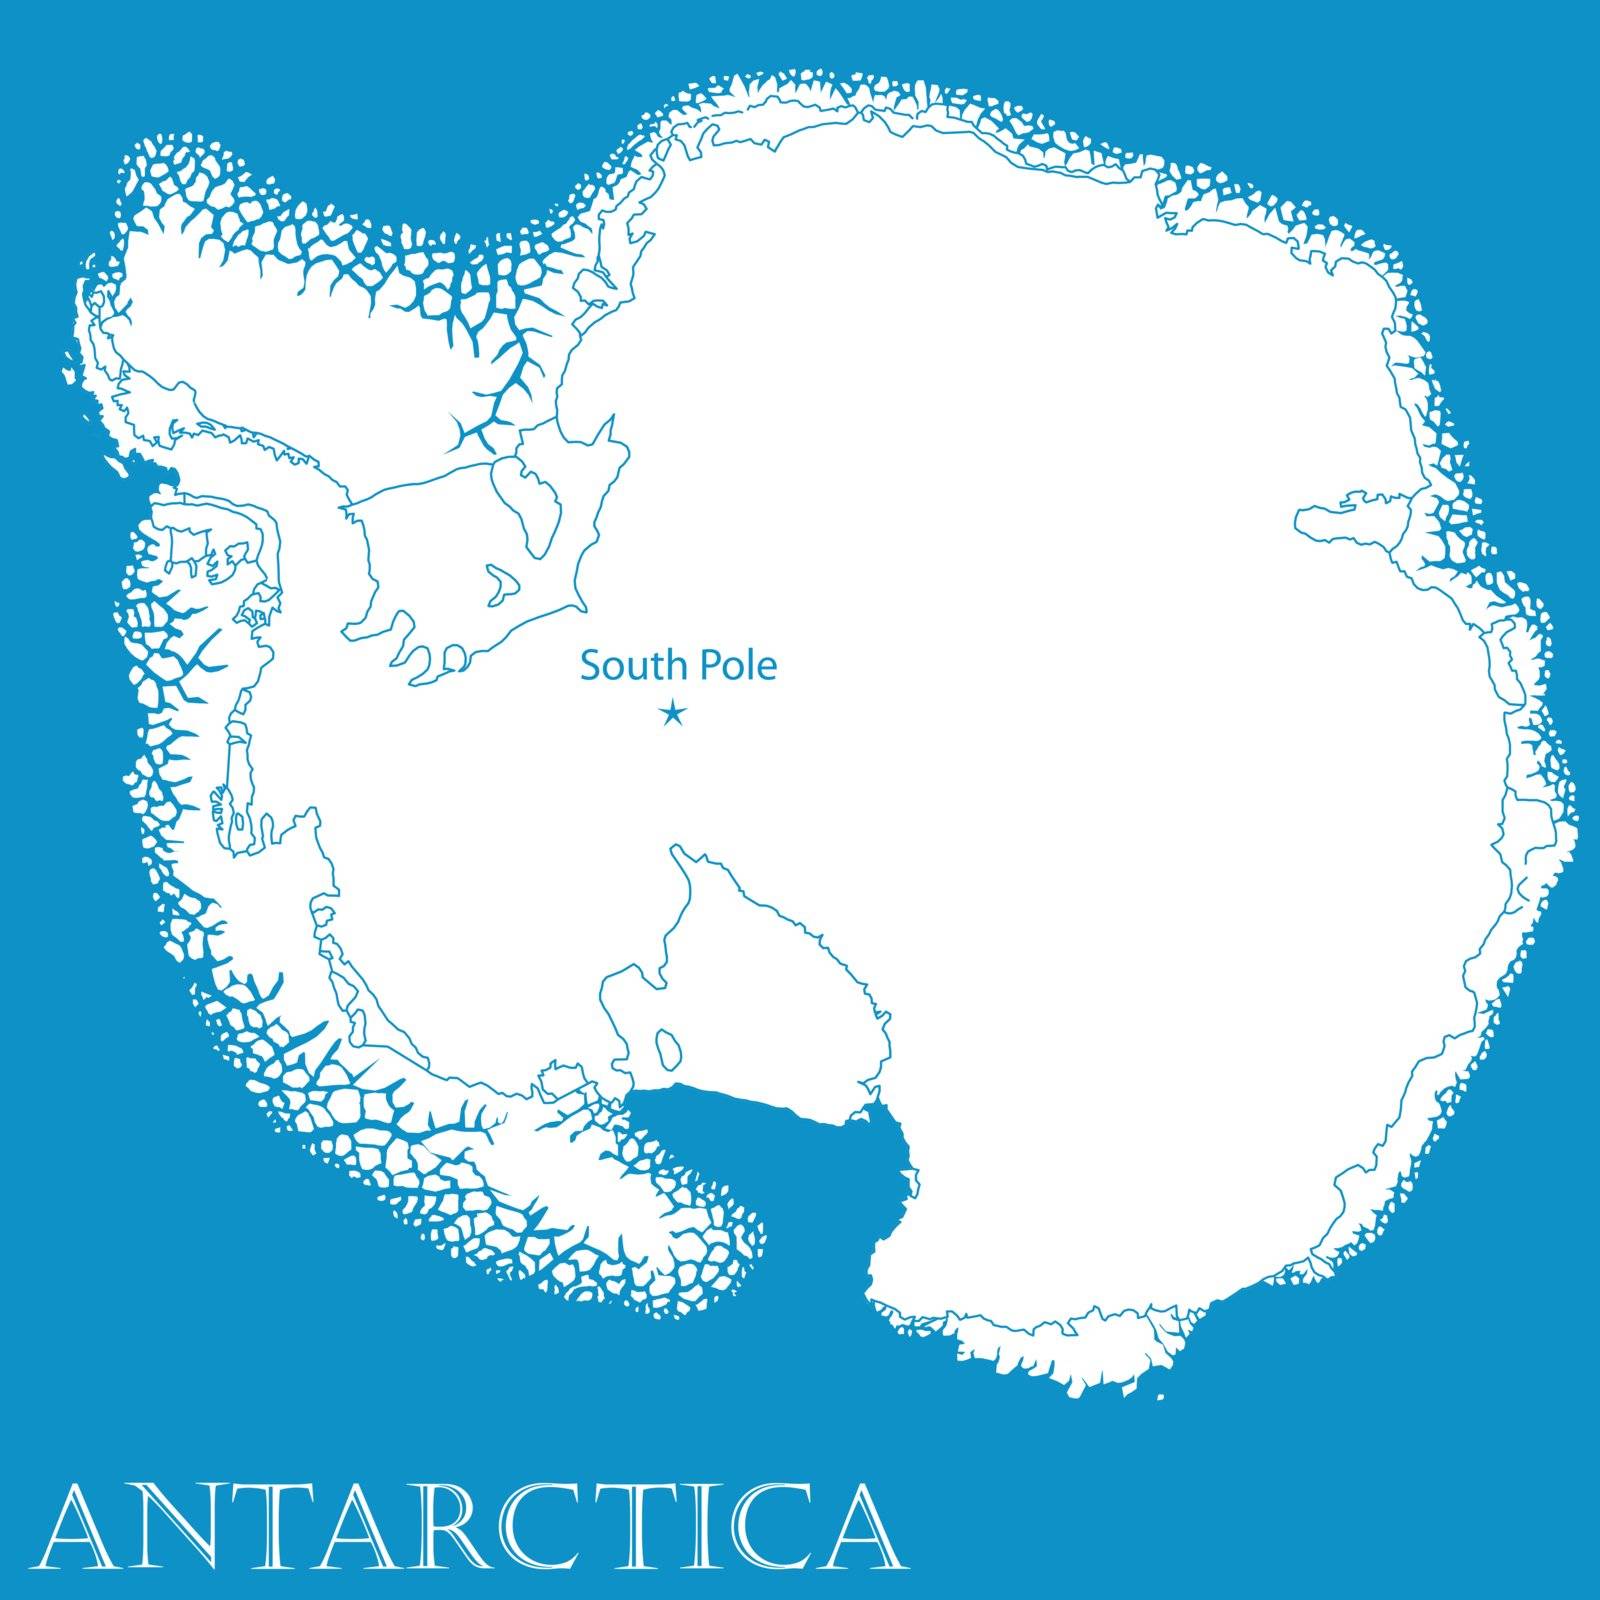 Antartica by Lirch